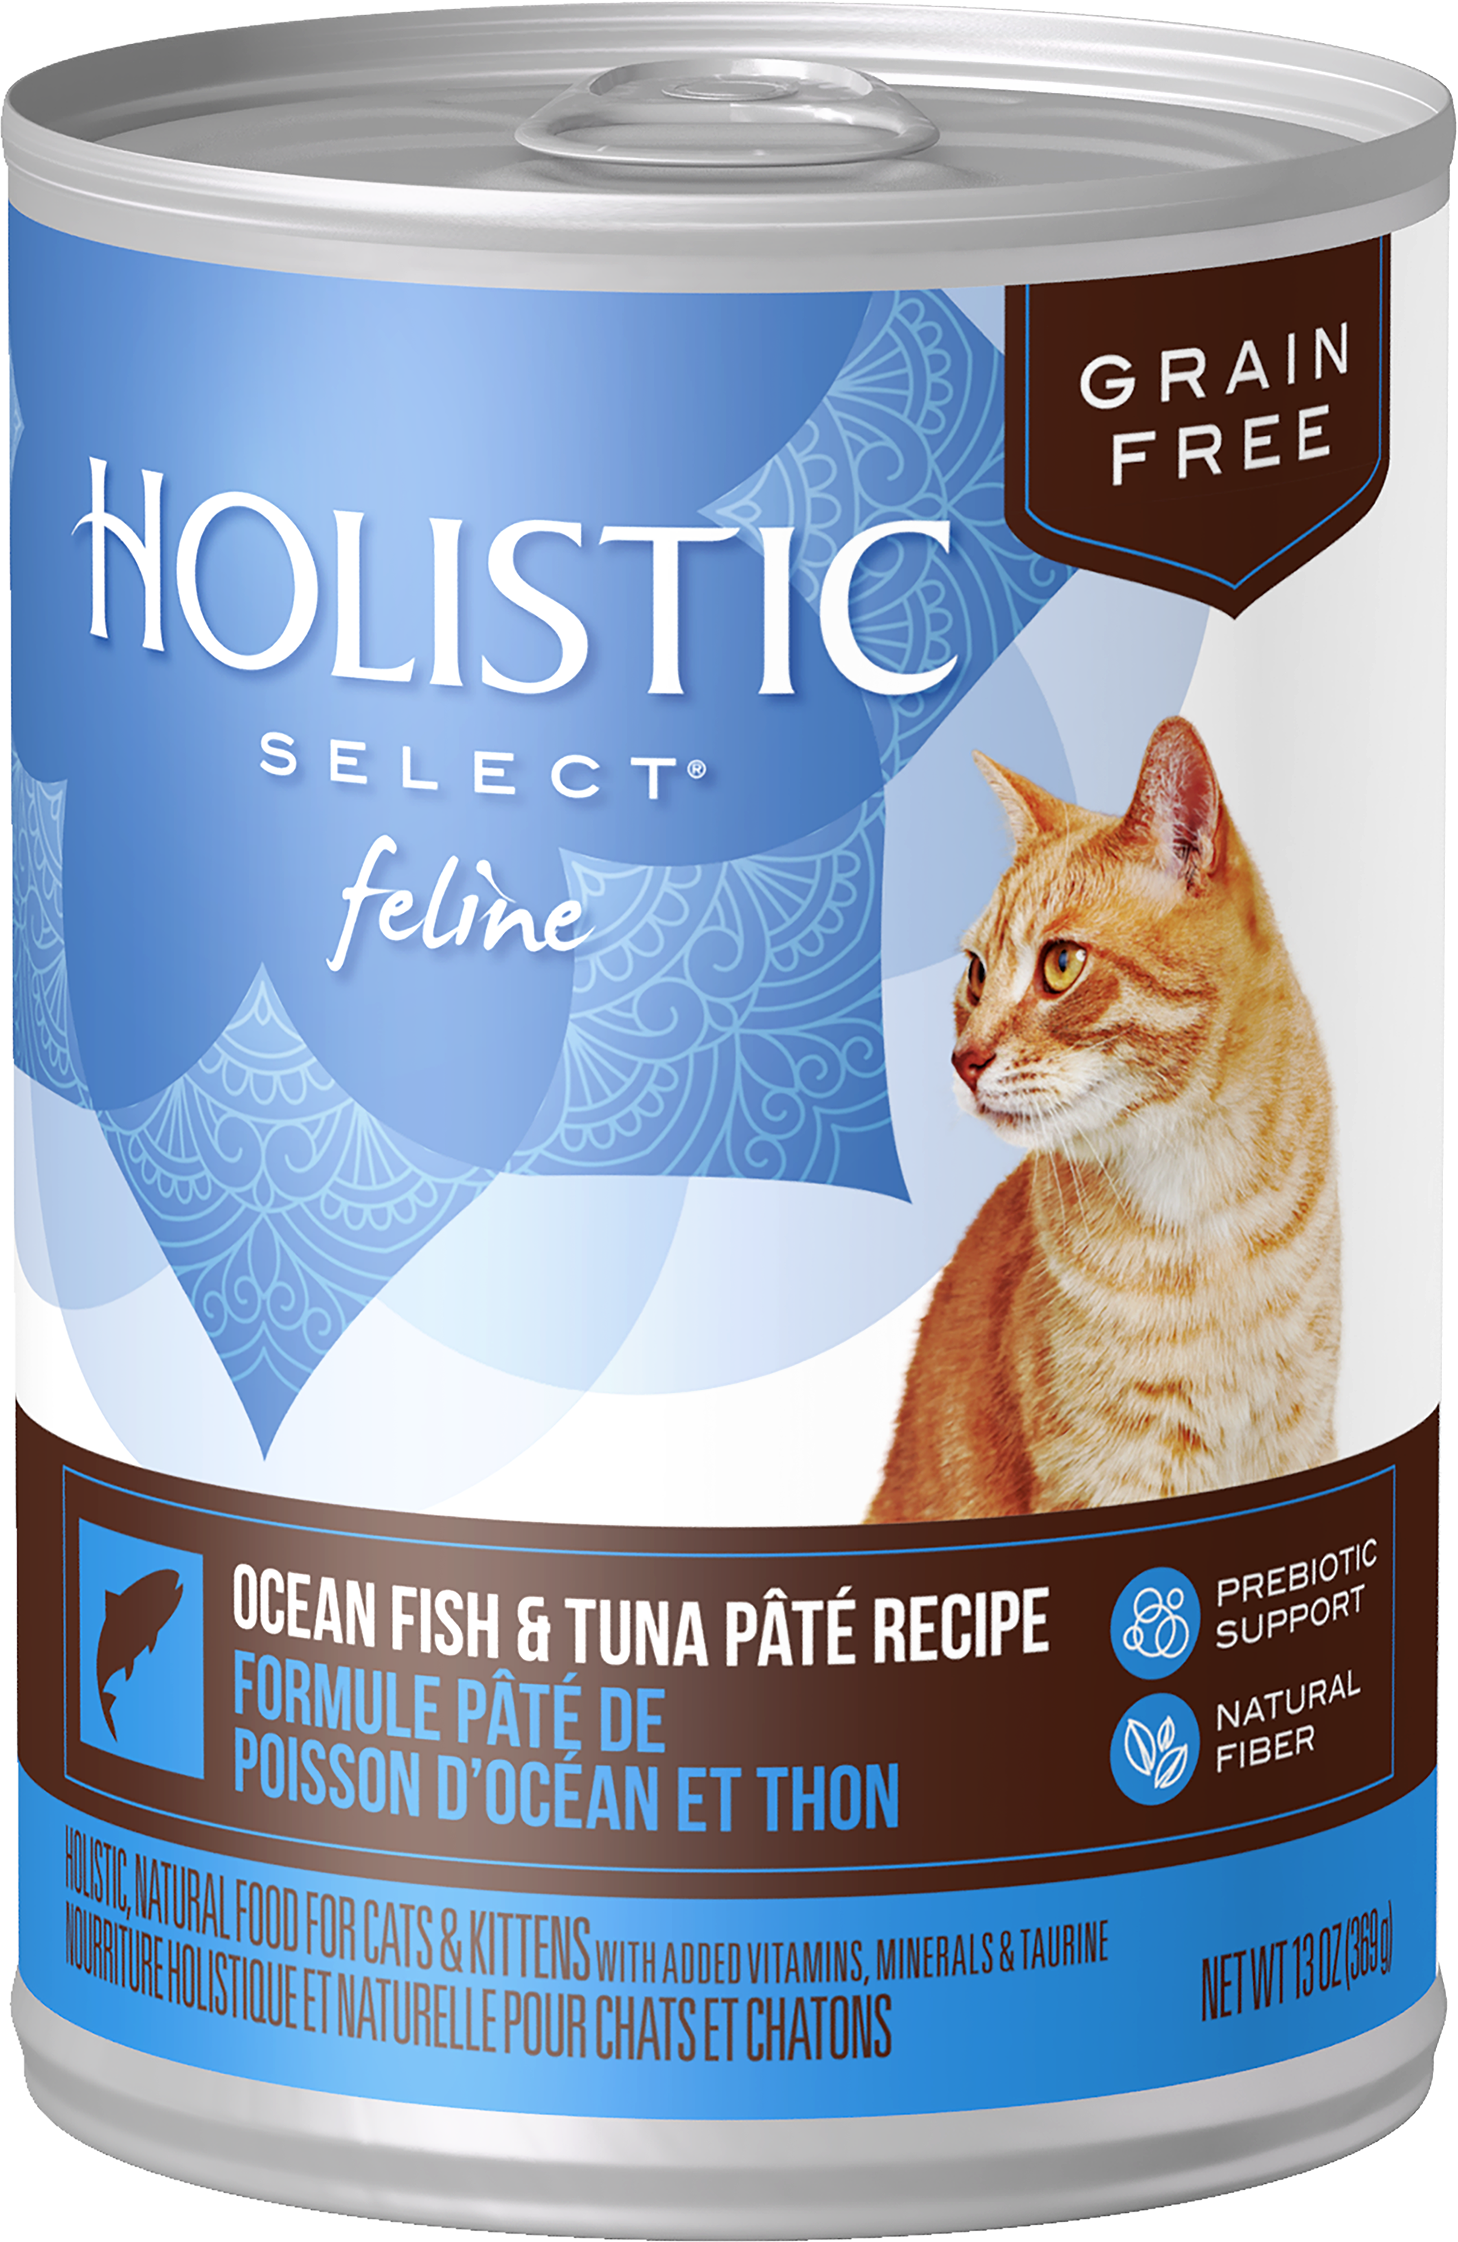 Grain Free Ocean Fish & Tuna Pâté Recipe product packaging image thumbnail 1